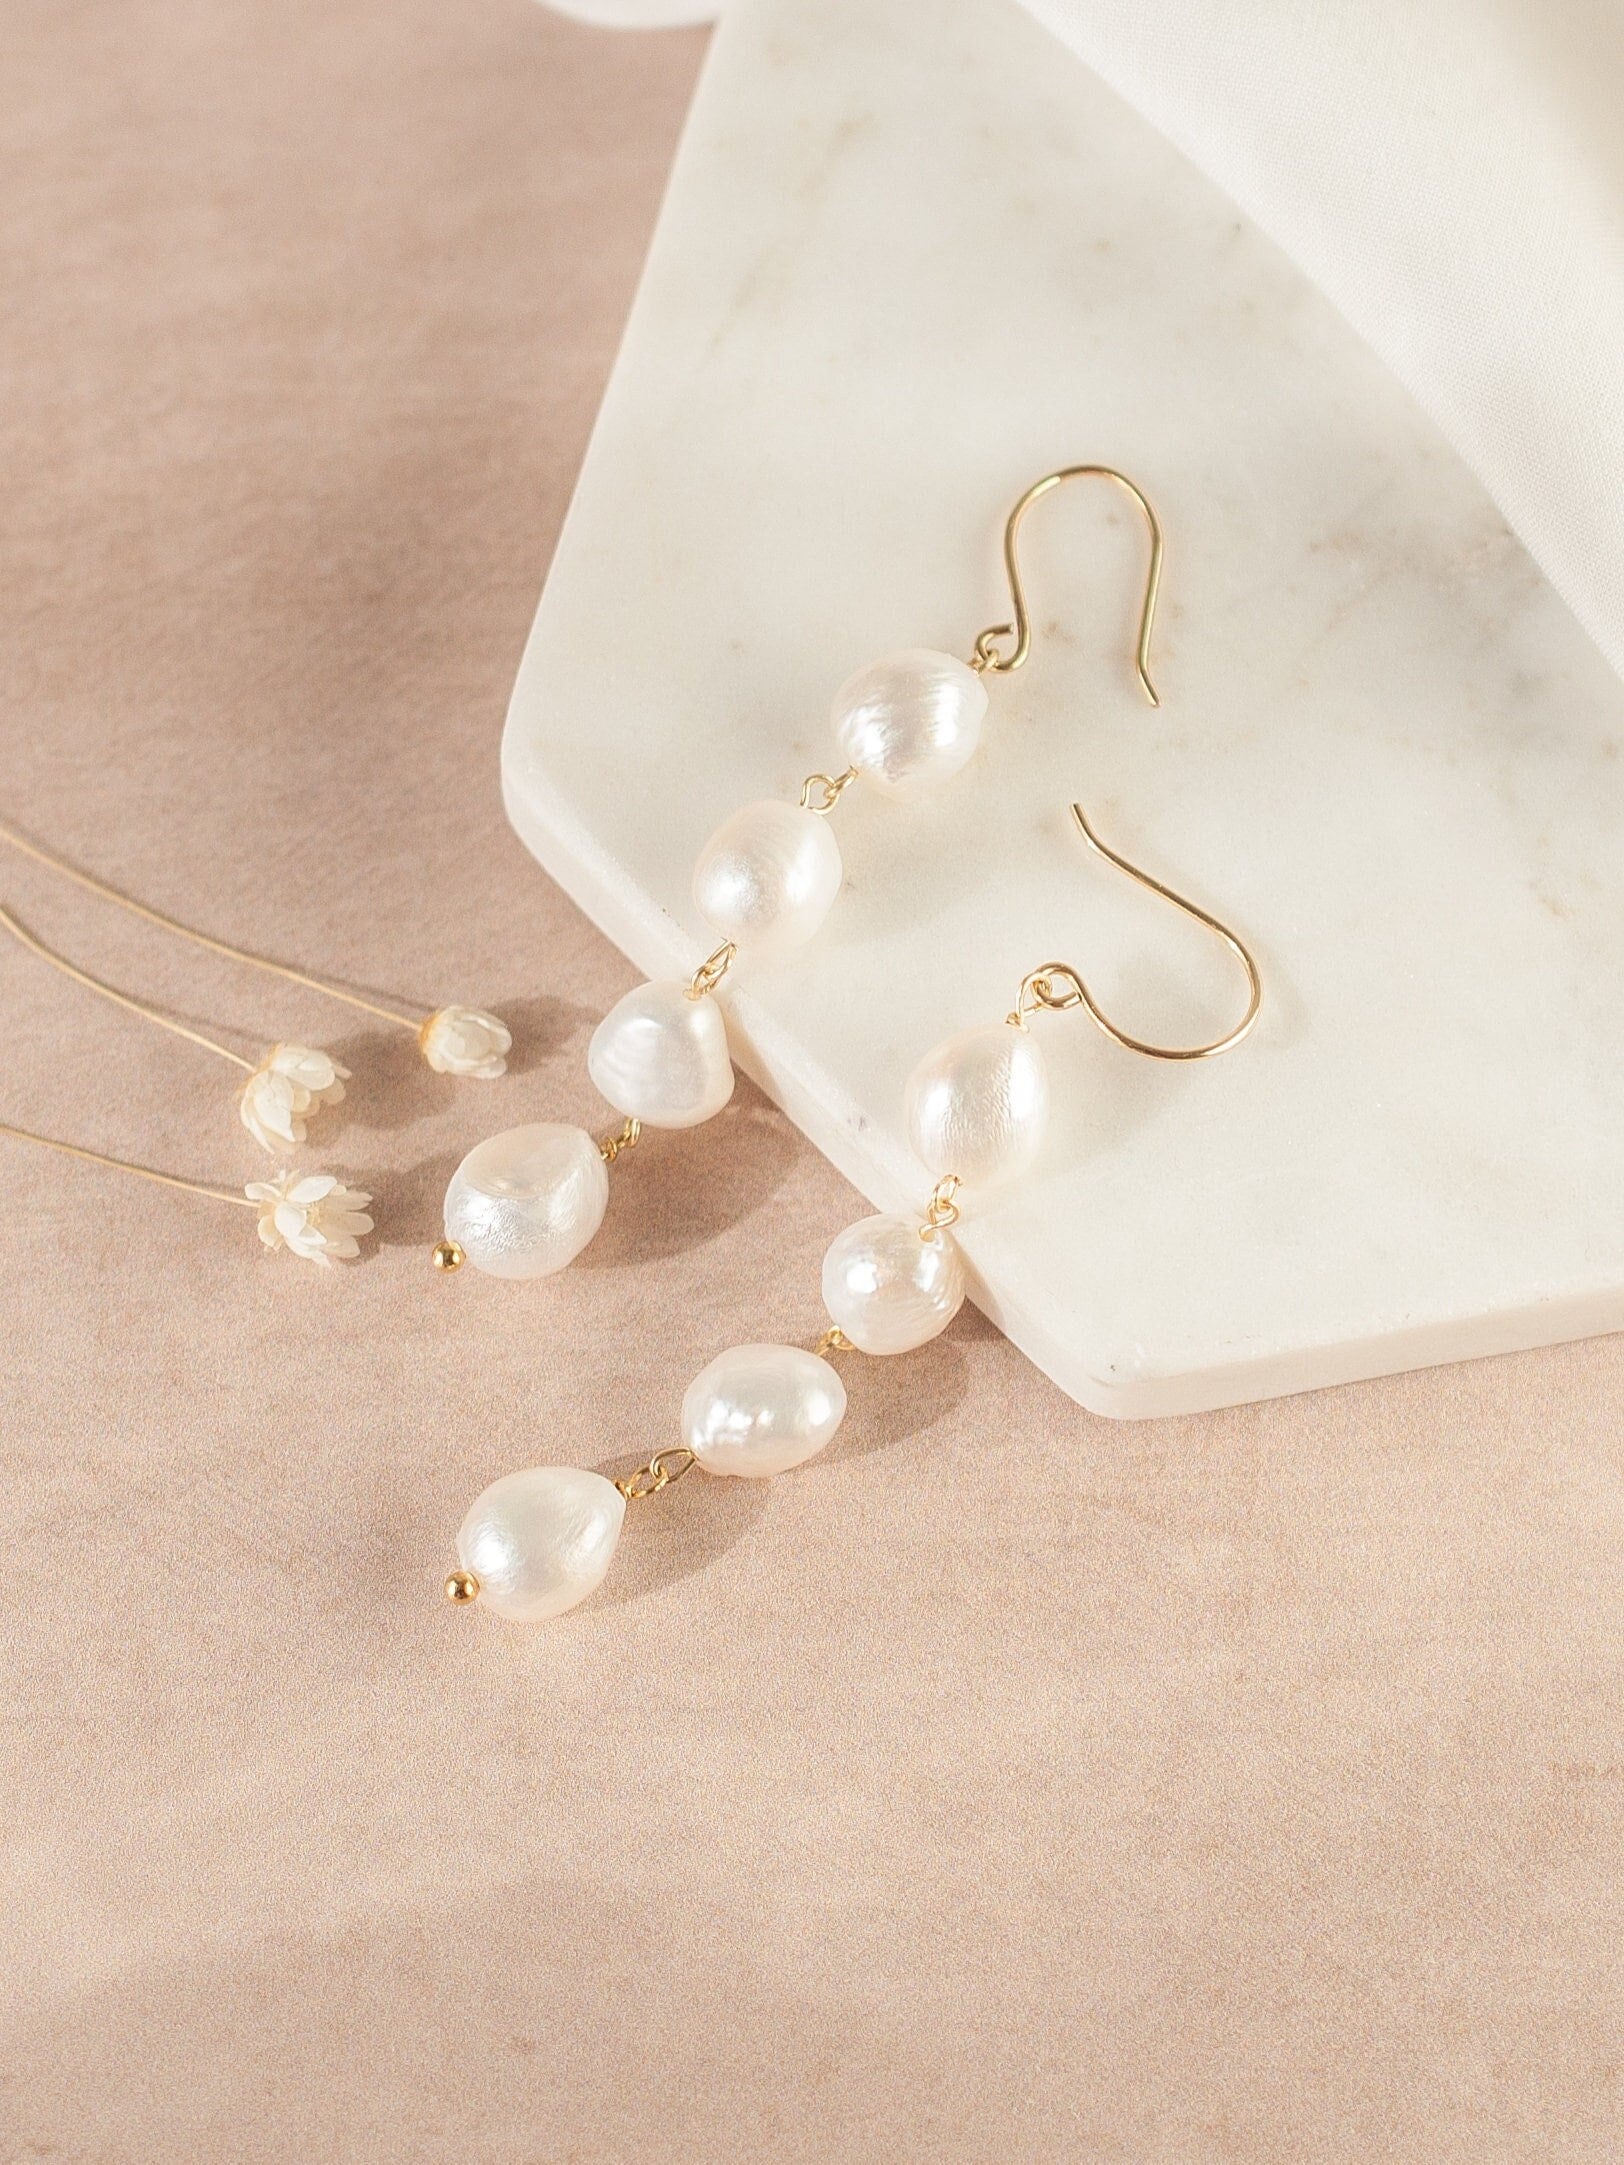 Bridal Pearl Earrings, 14K Gold Filled Tarnish Resistant, Baroque Drop Pearls Long Dangle Earrings